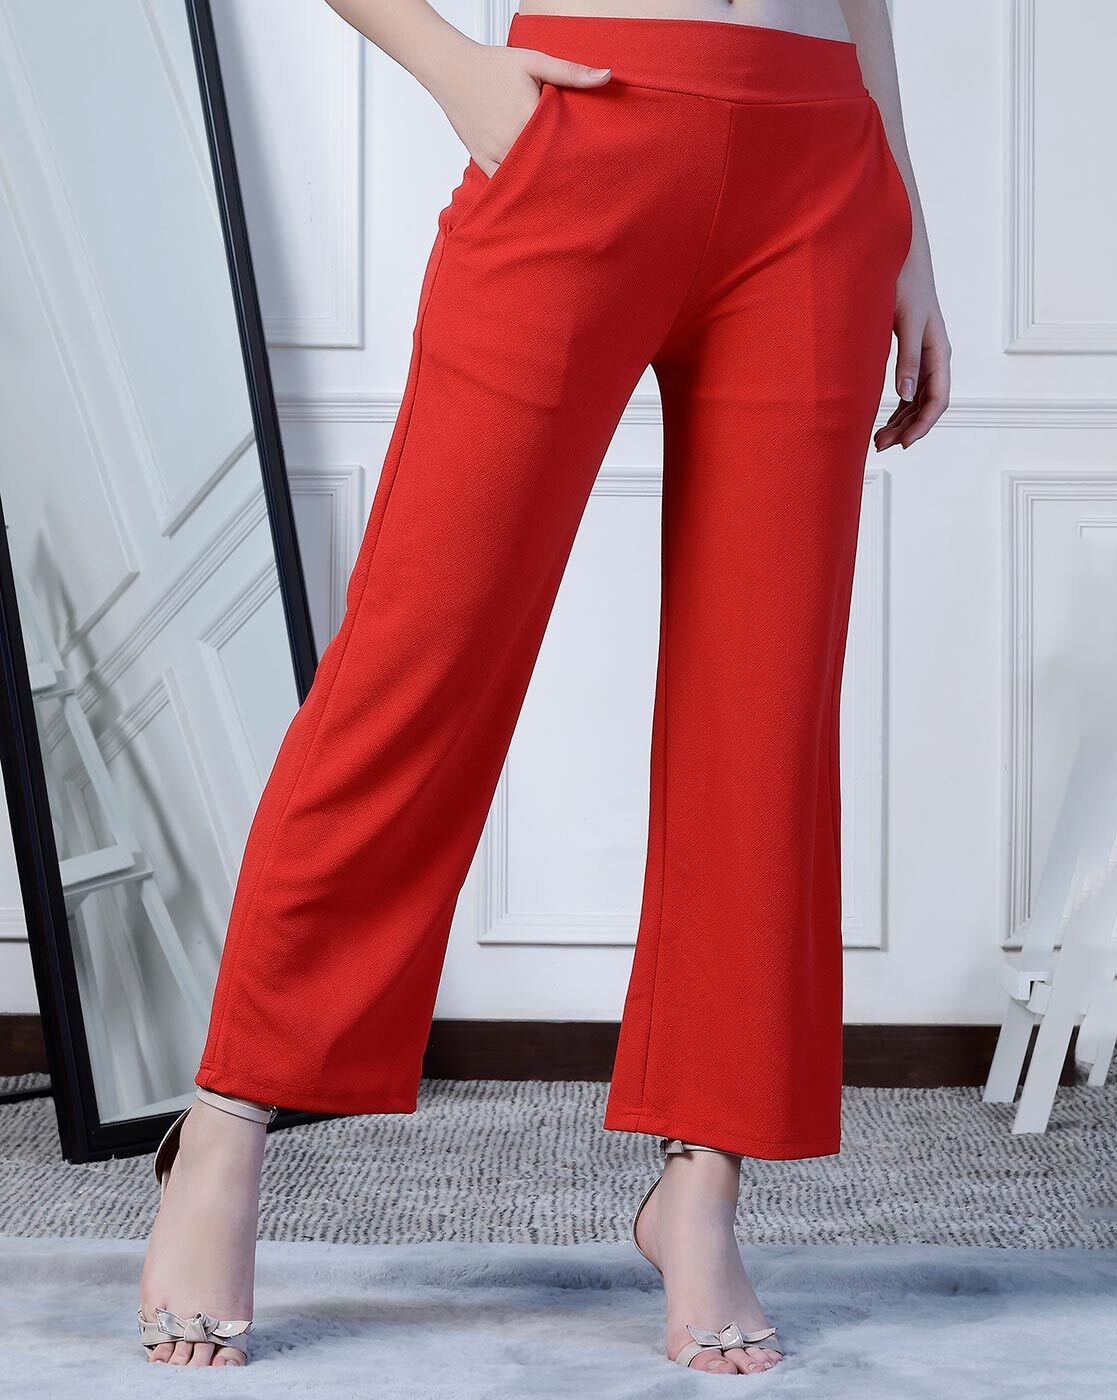 Women's Elegant Plain Skinny Red Pants XL - Walmart.com